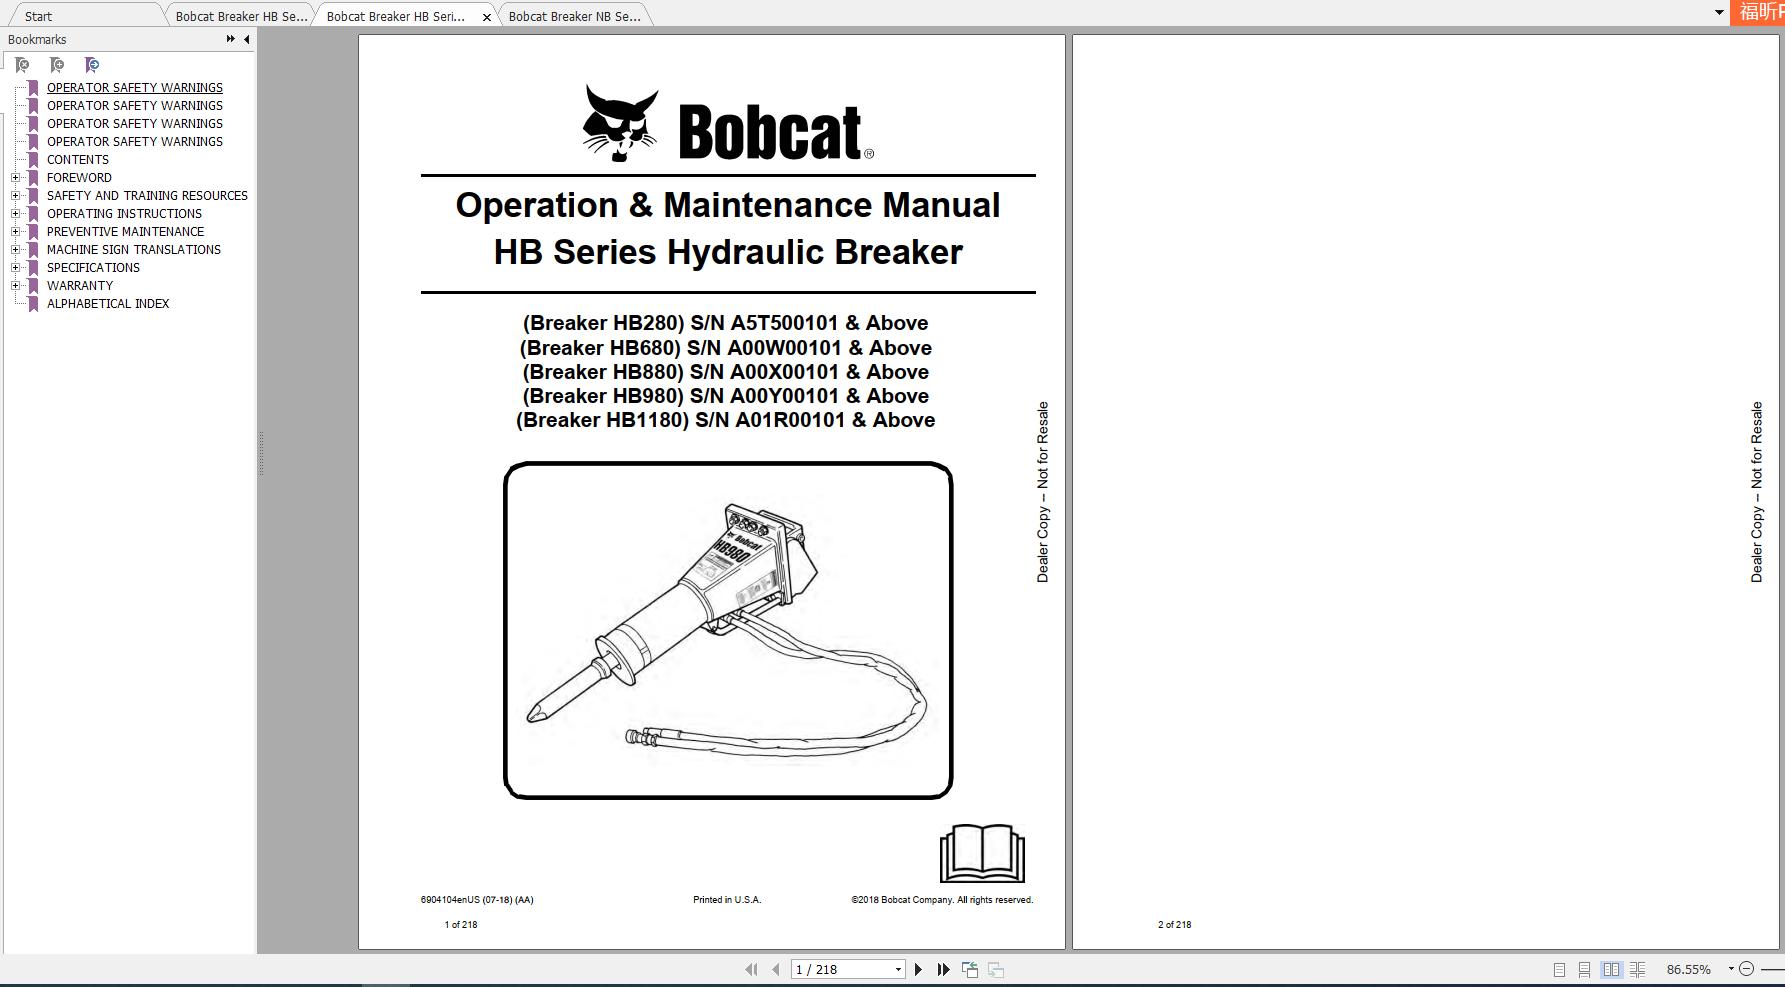 Bobcat Hydraulic Breaker HB Series Operation & Maintenance Manuals ...